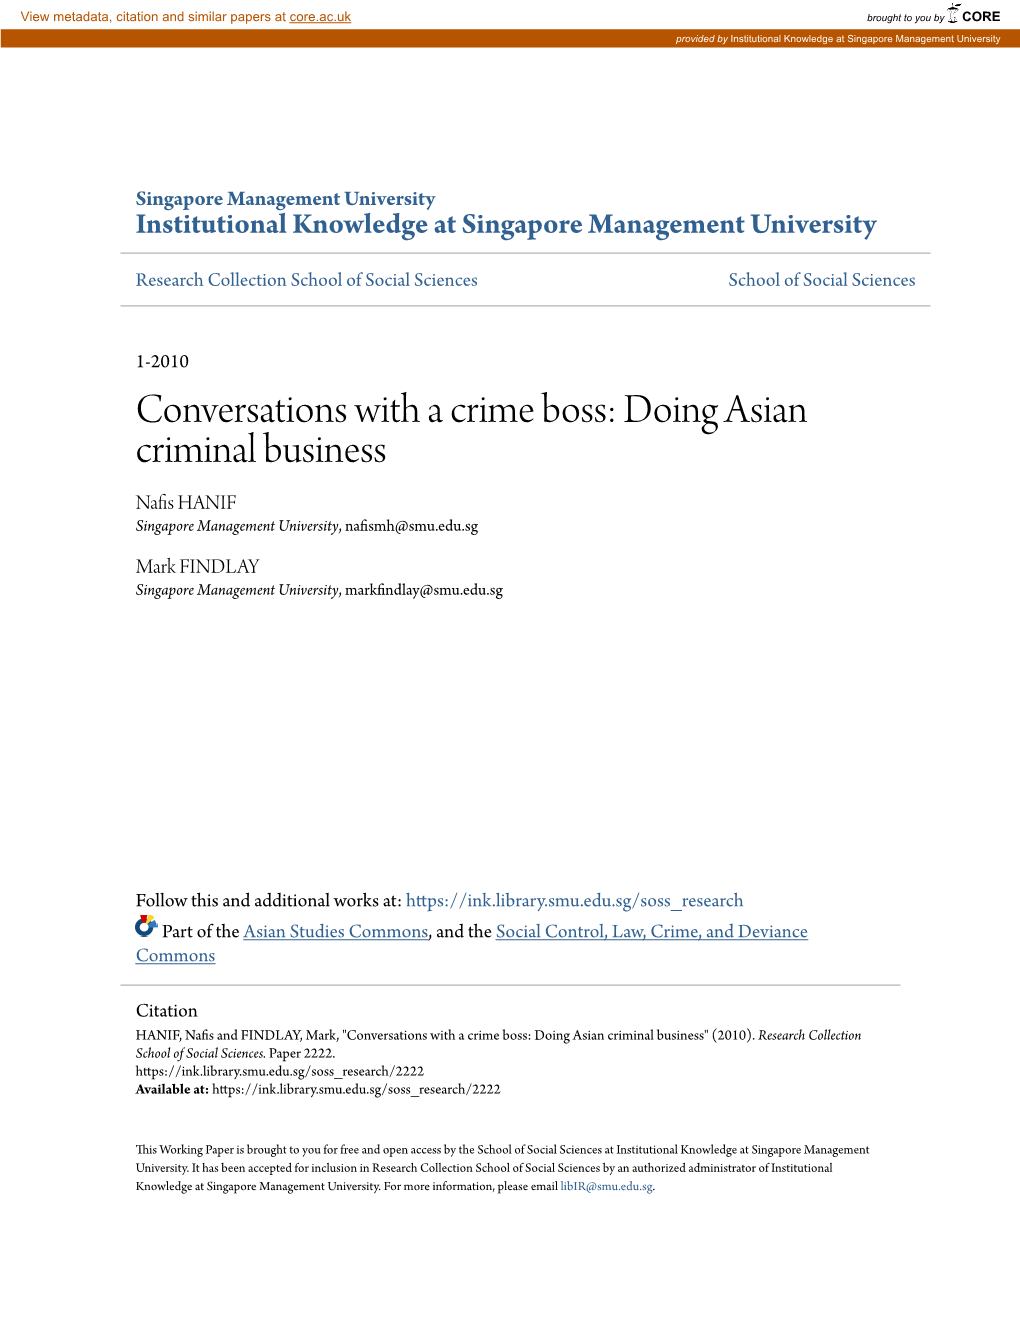 Conversations with a Crime Boss: Doing Asian Criminal Business Nafis HANIF Singapore Management University, Nafismh@Smu.Edu.Sg